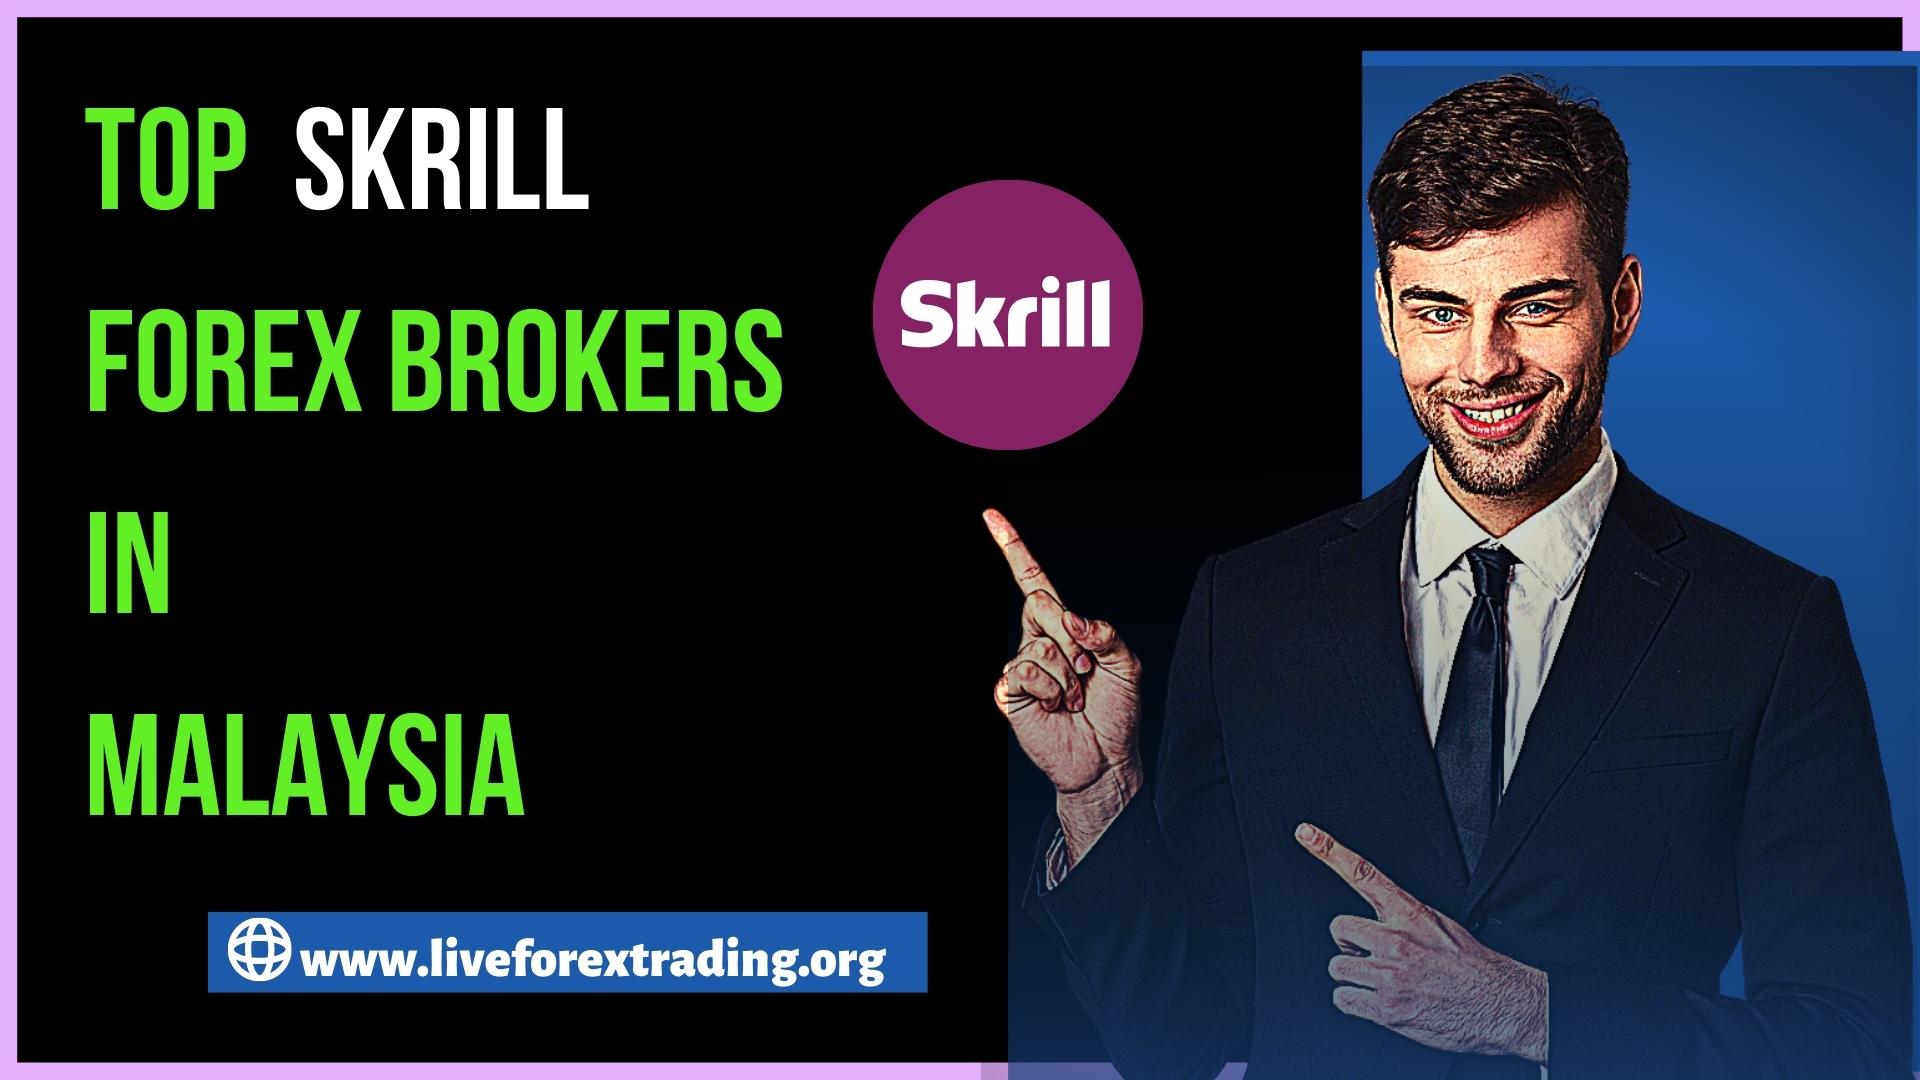 Top Skrill Forex Brokers 2022 - Forex Brokers 💸 Accepting Skrill 💸